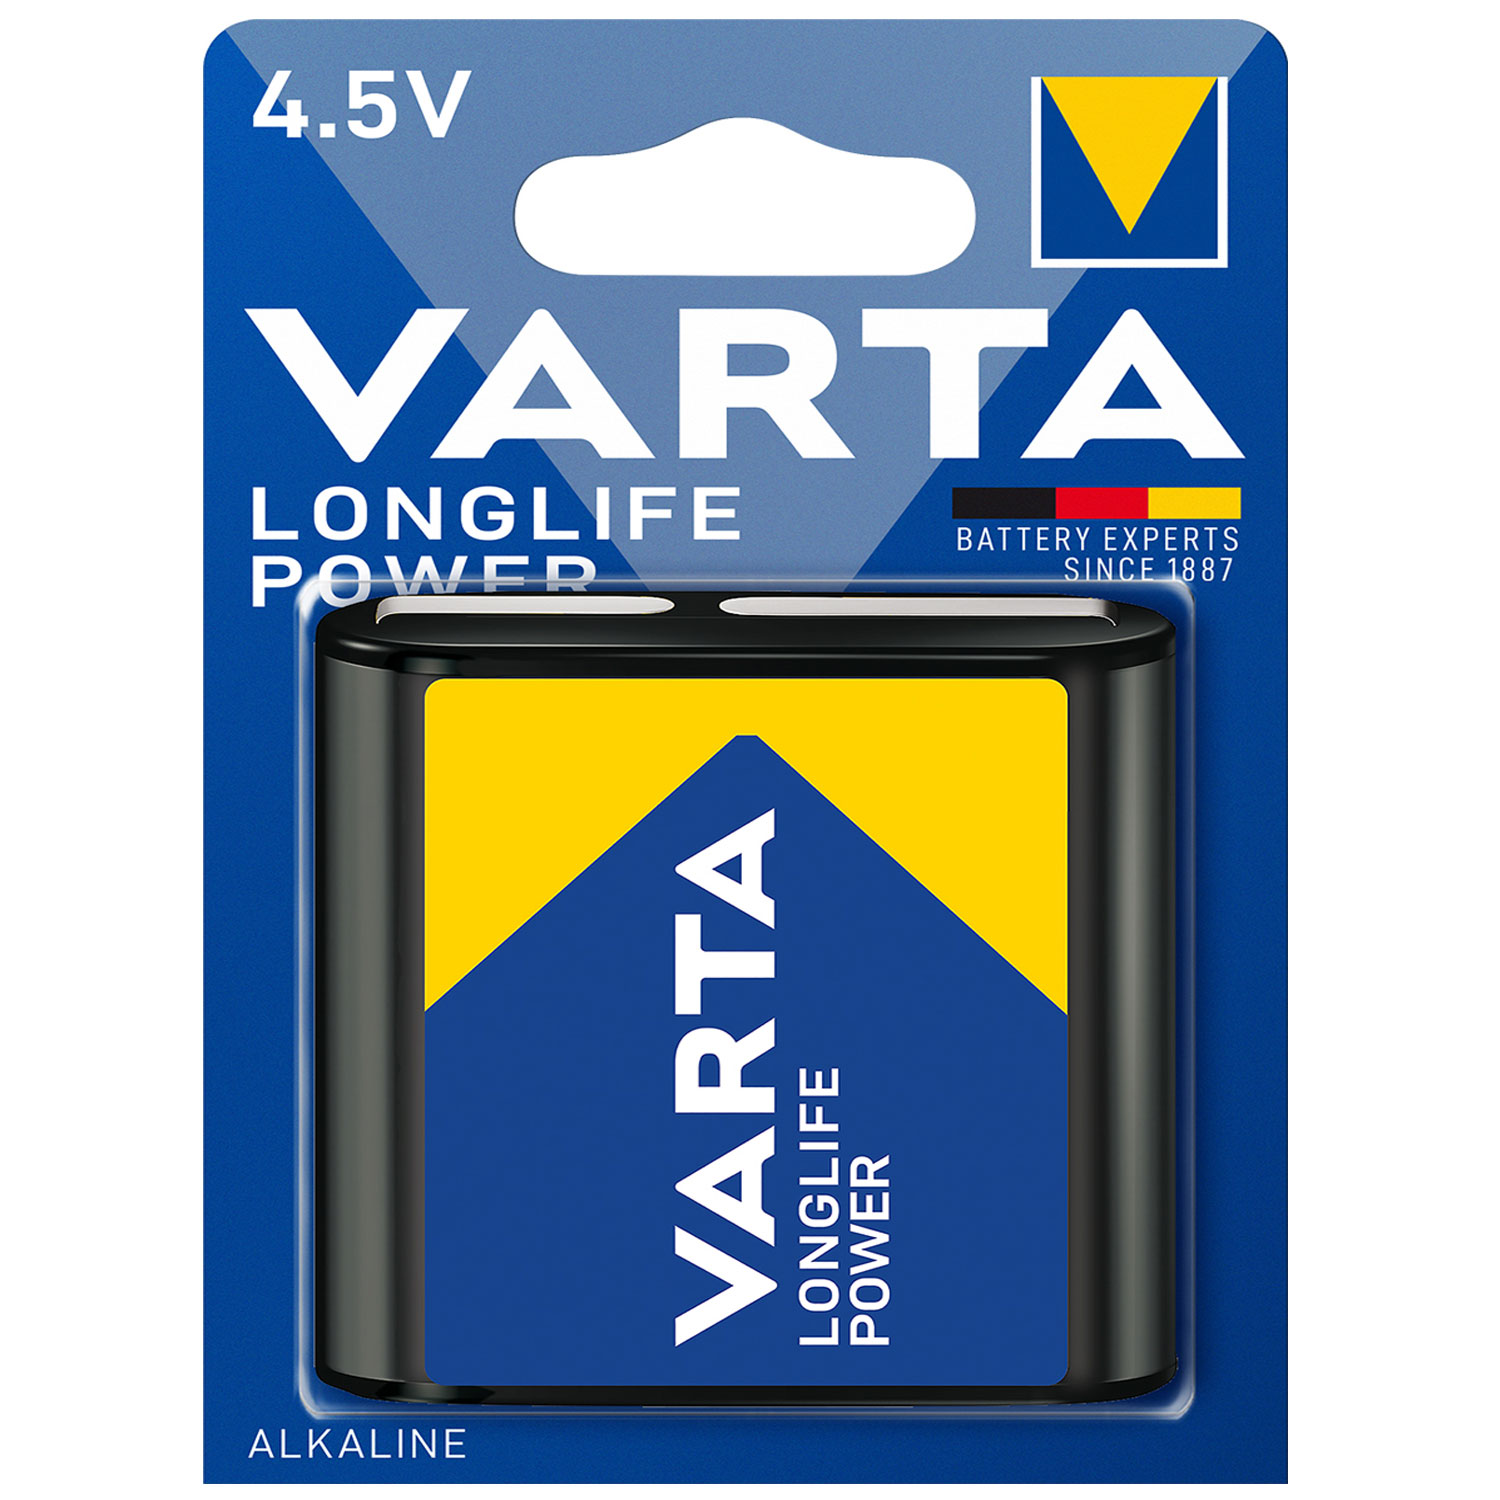 VARTA Flachbatterie 4912 Longlife Power Tray